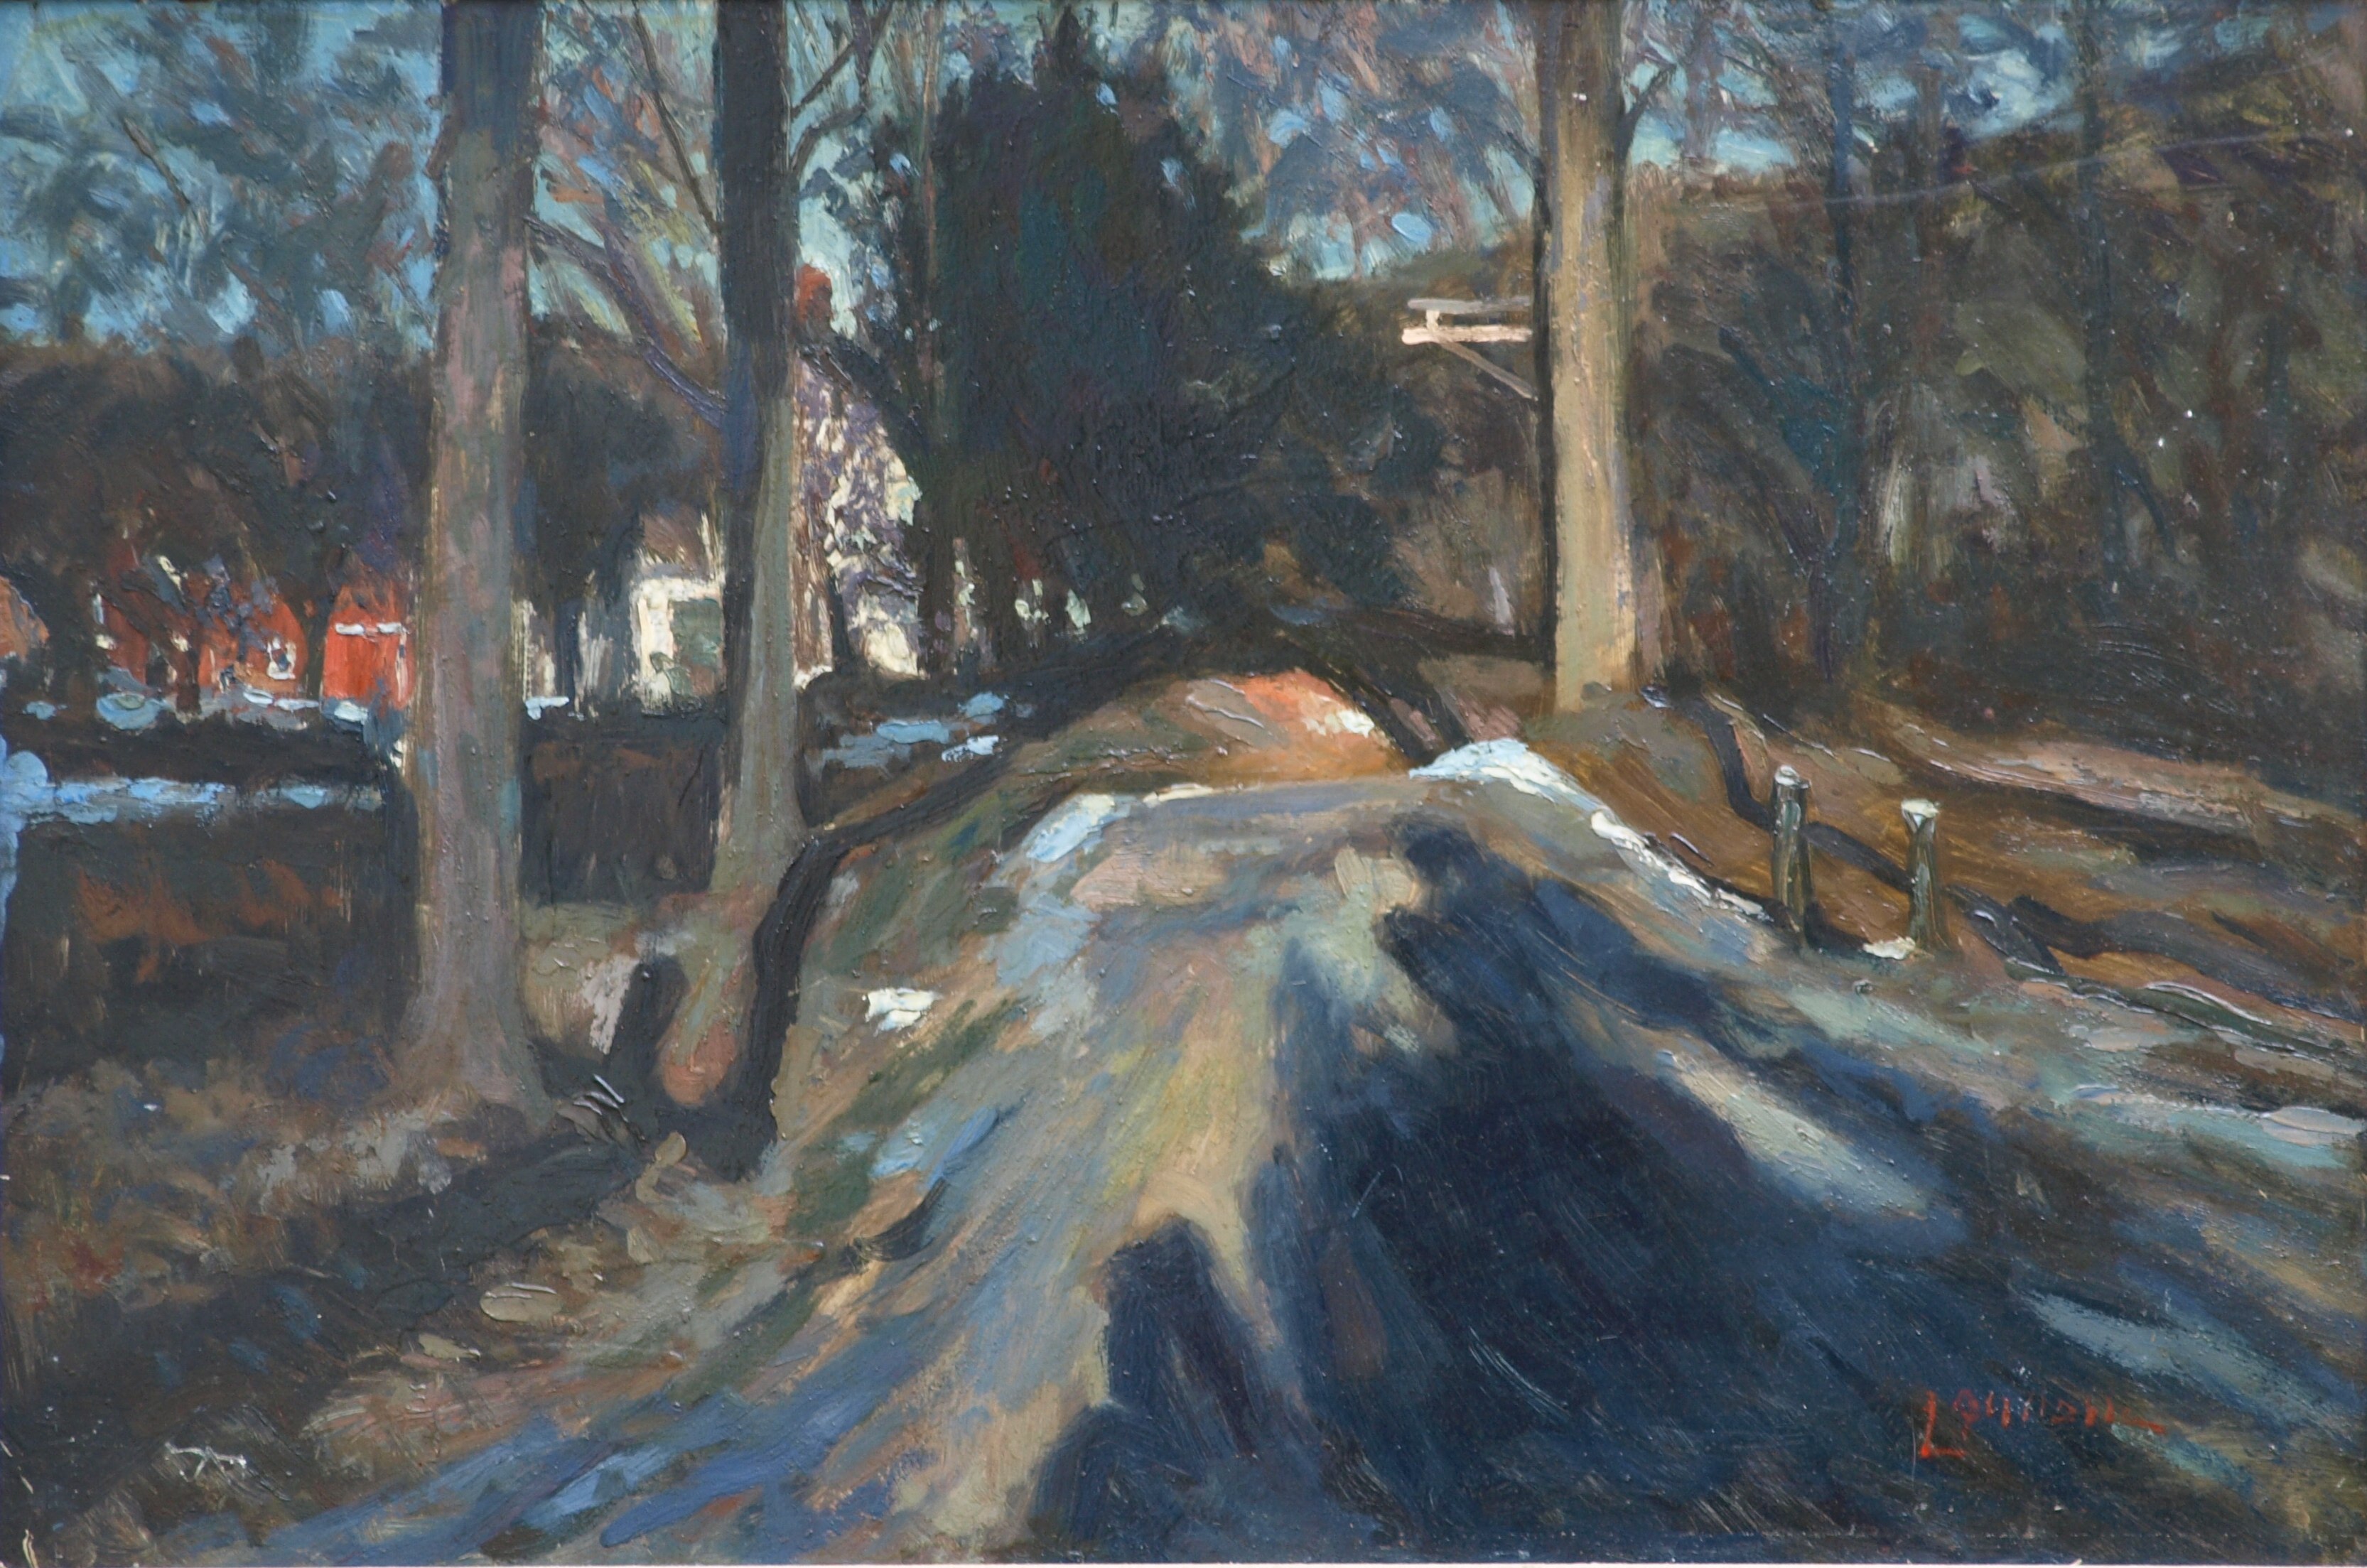 Melting Snows, Oil on Canvas, 16 x 24 Inches, by Bernard Lennon, $650